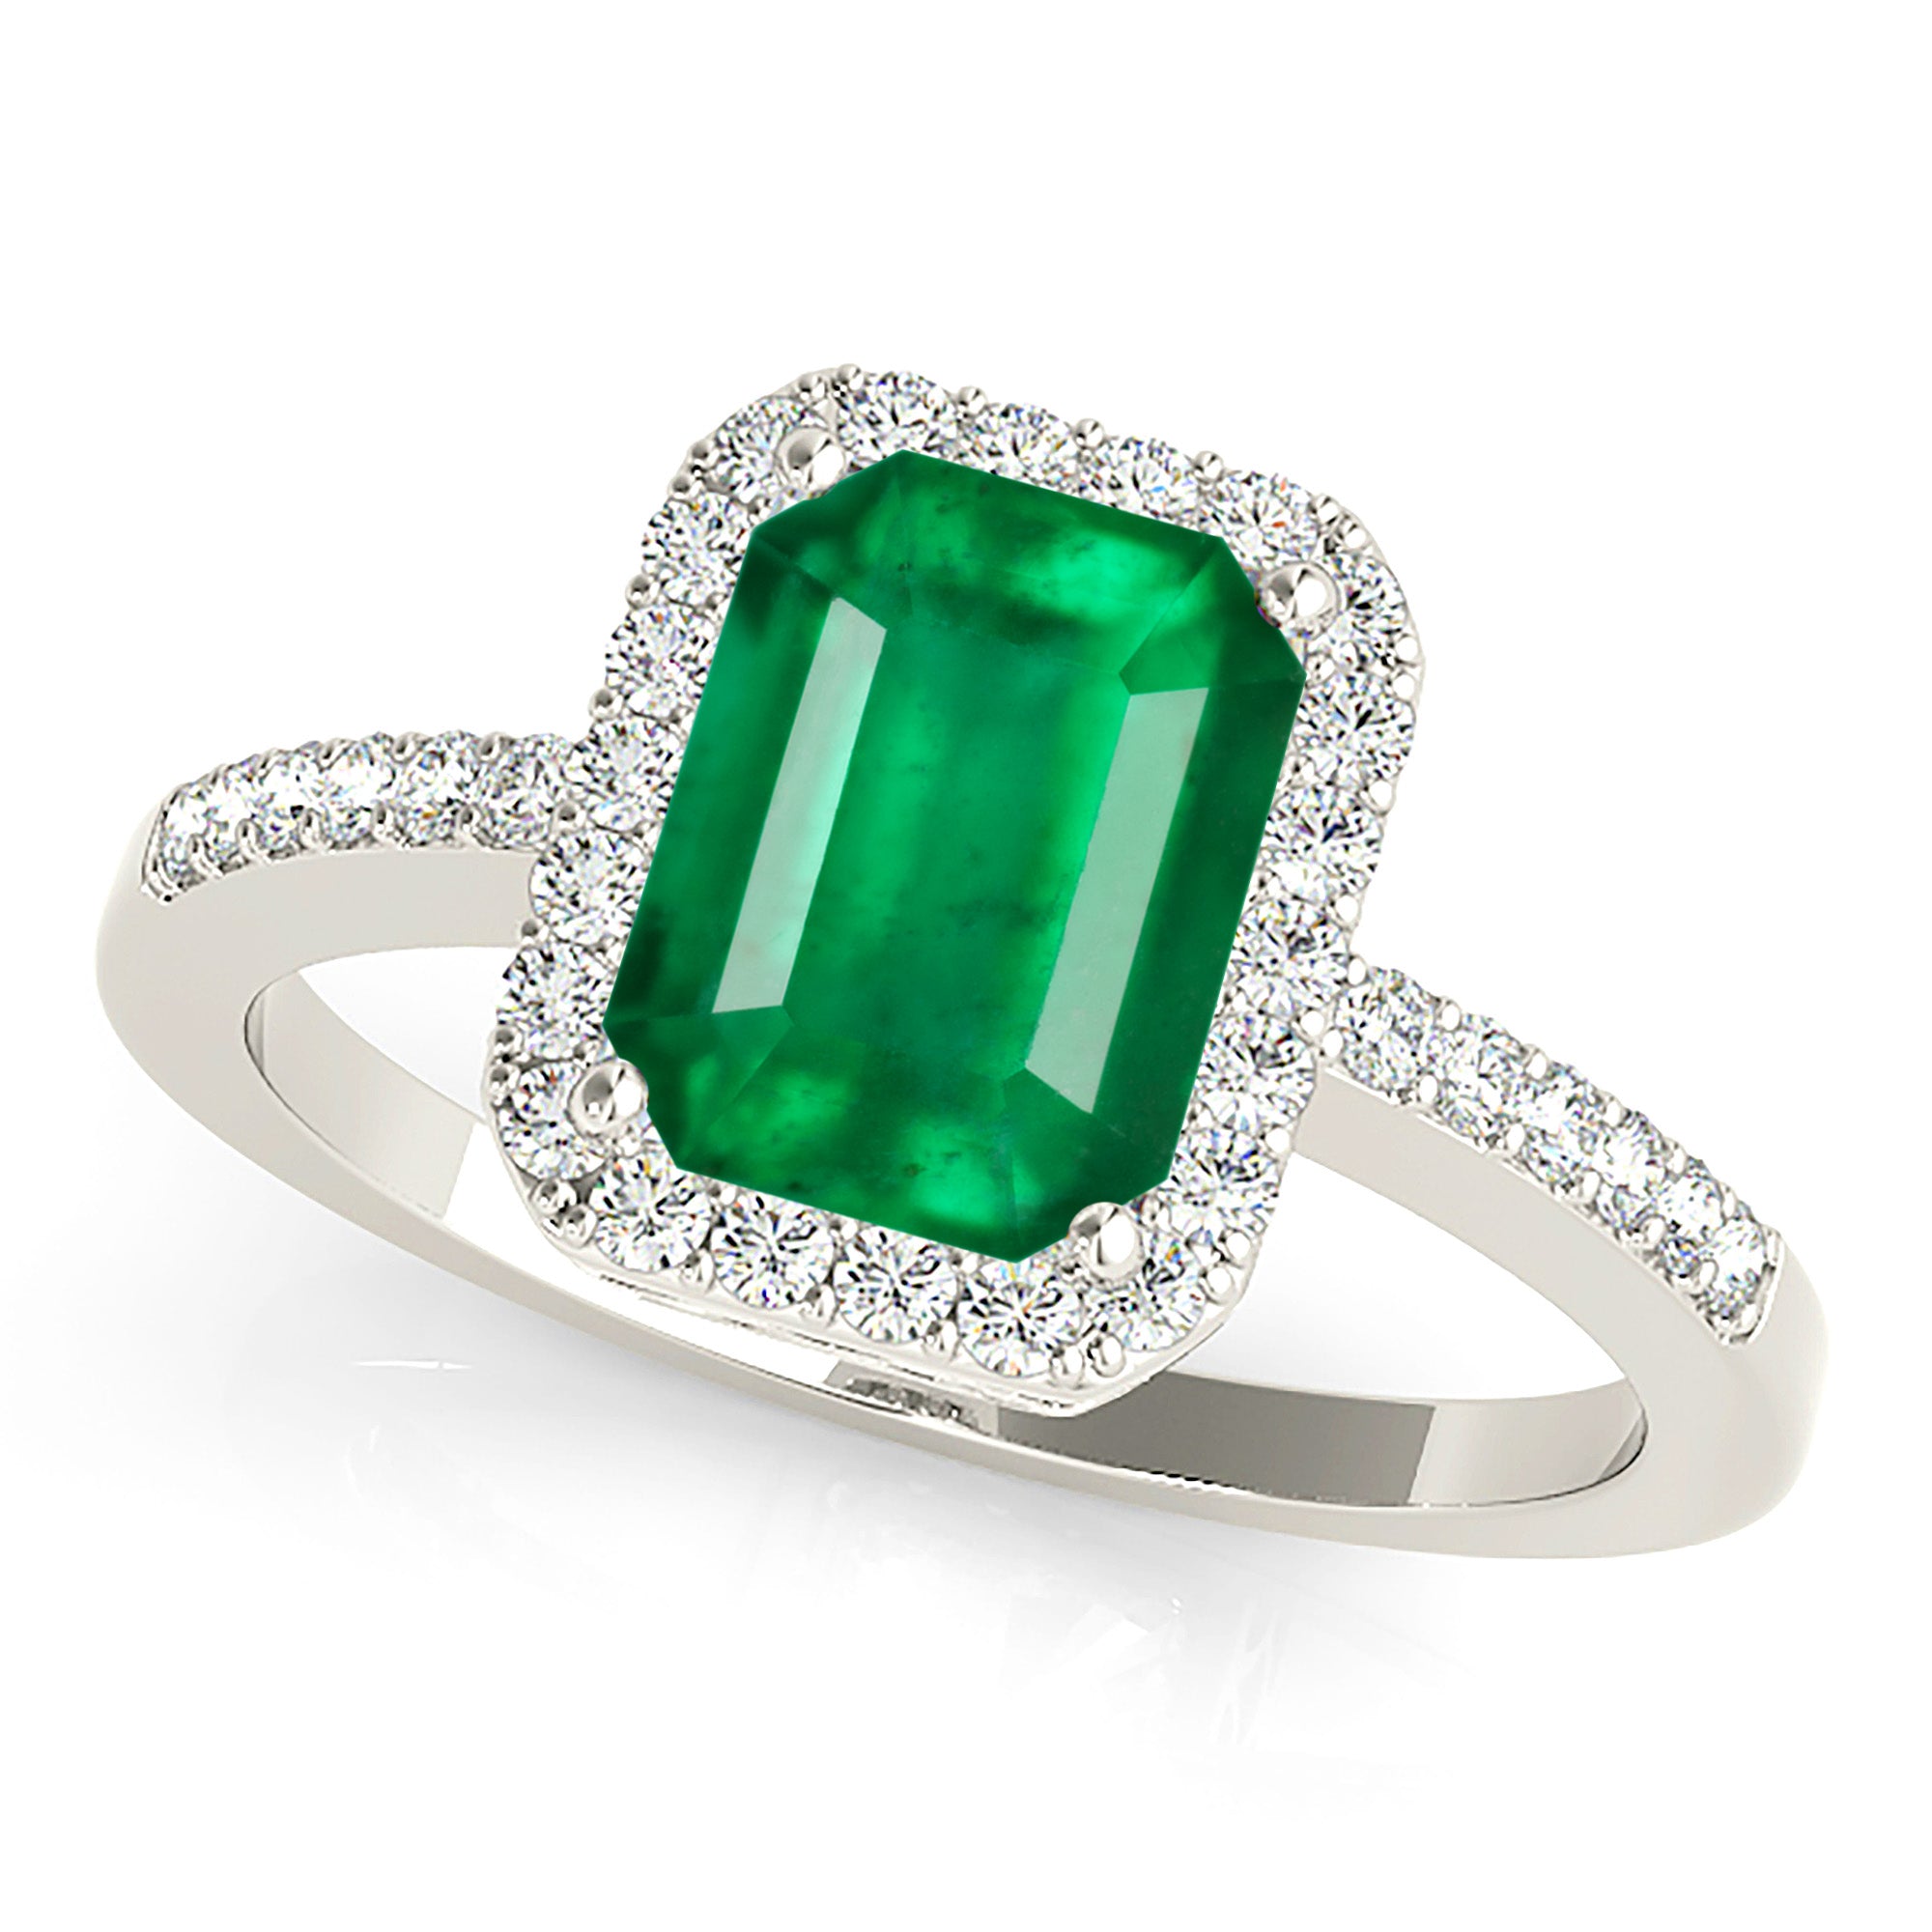 2.15 ct. Genuine Emerald Ring With 0.25 ctw. Diamond Halo and Diamond Thin Band,Emerald cut Emerald-in 14K/18K White, Yellow, Rose Gold and Platinum - Christmas Jewelry Gift -VIRABYANI